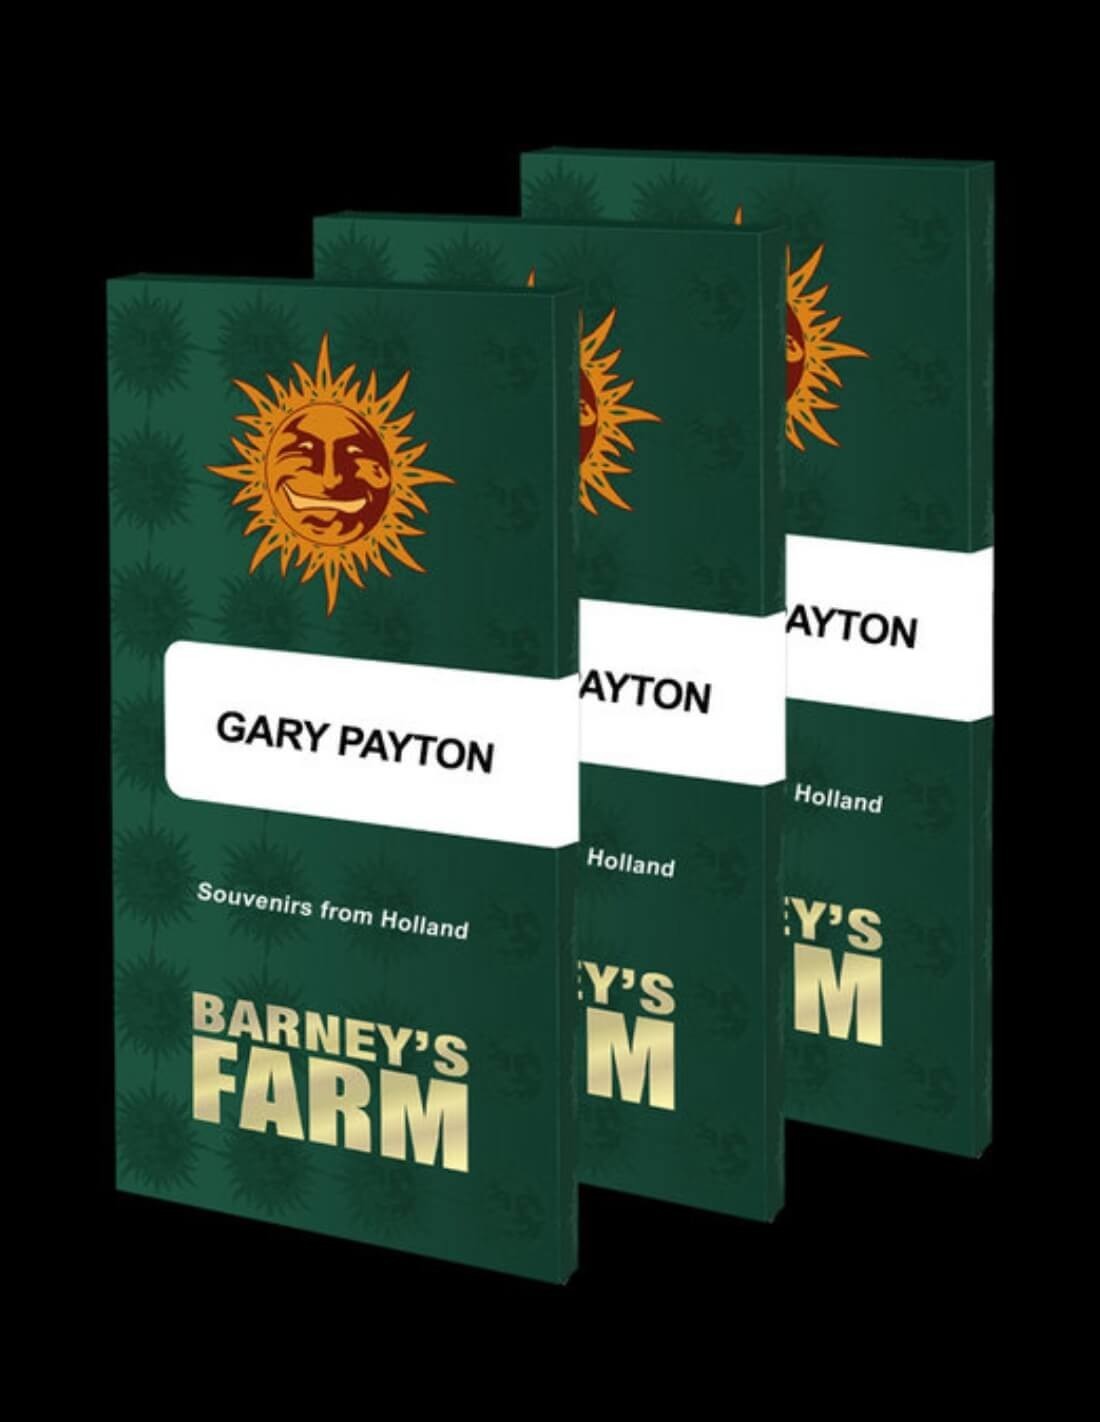 Gary Payton von Barney's Farm Seeds